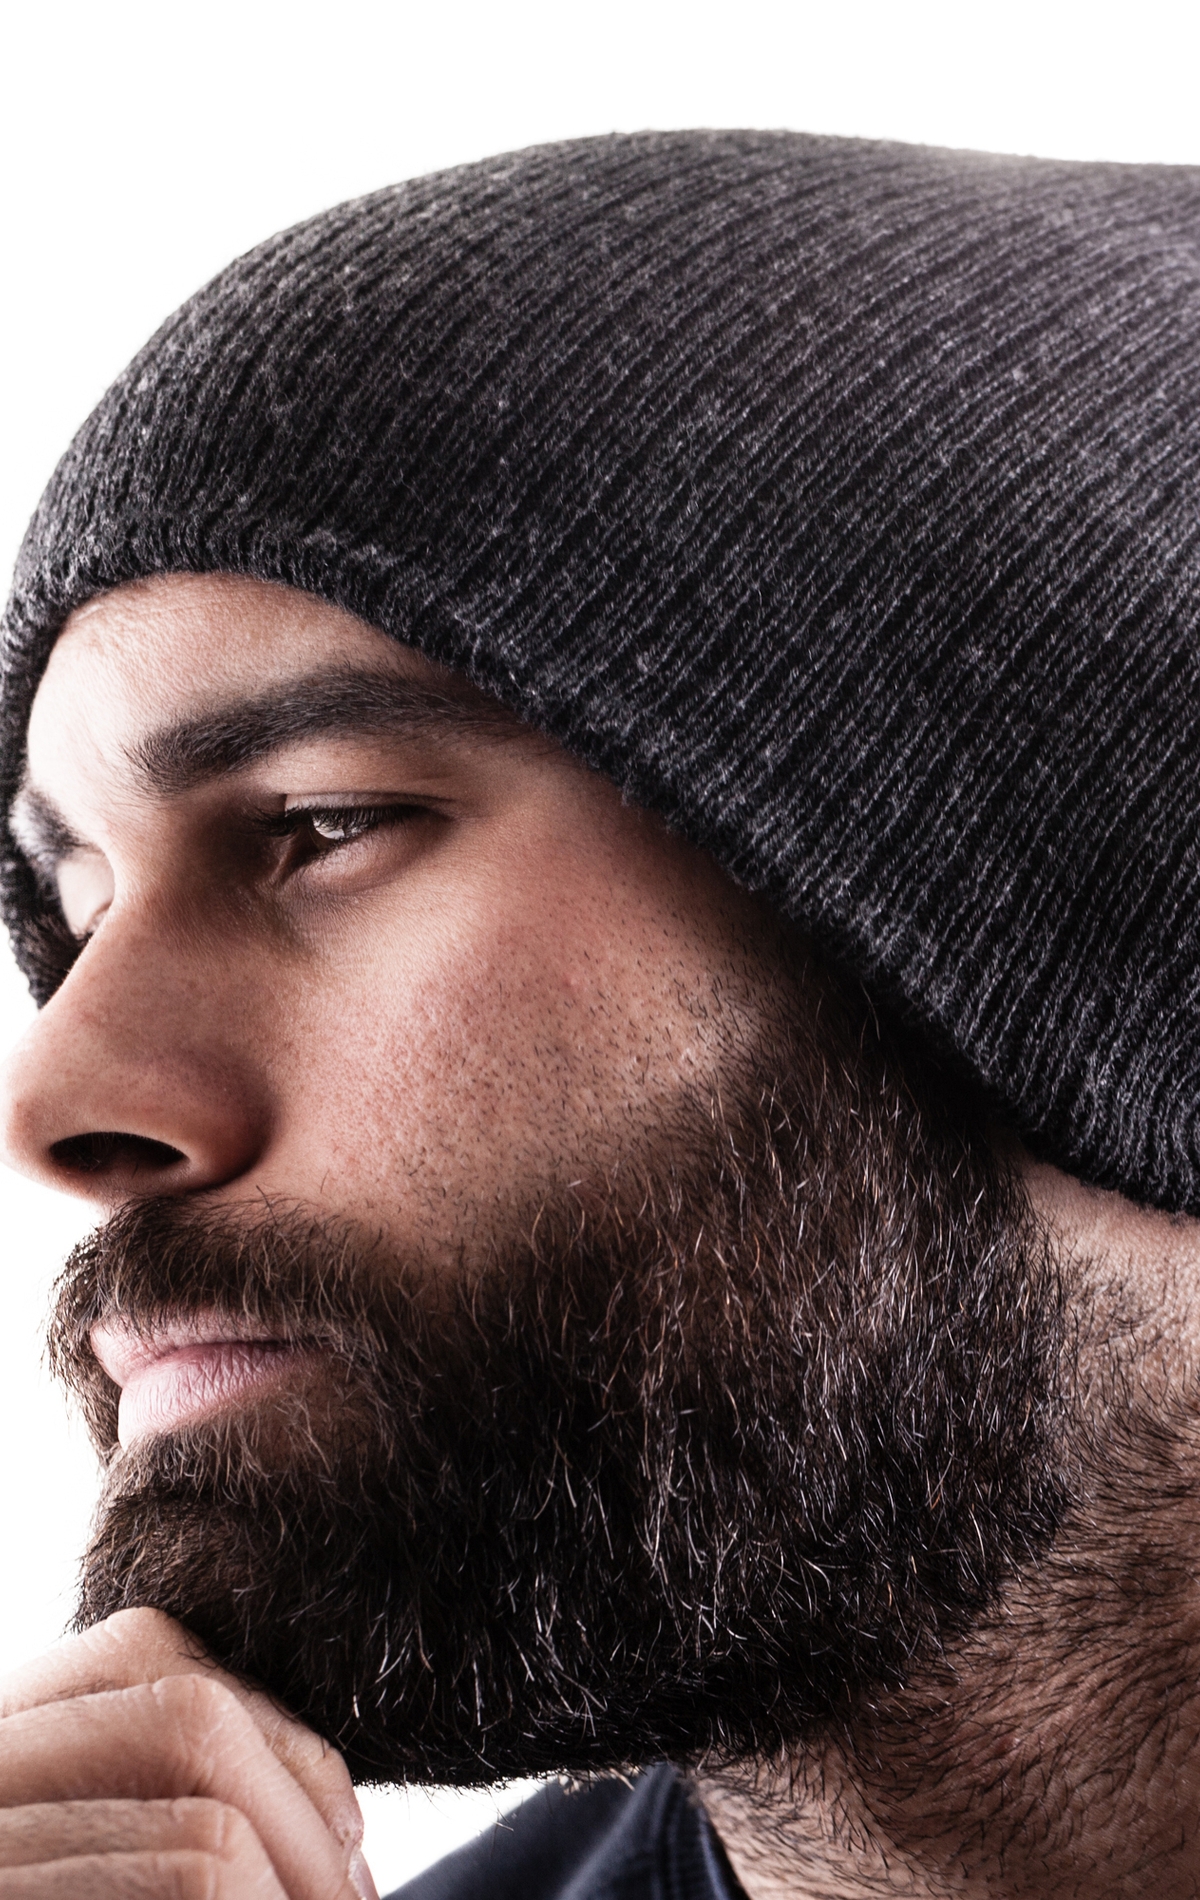 Image: Man, face, beard, hat, white background